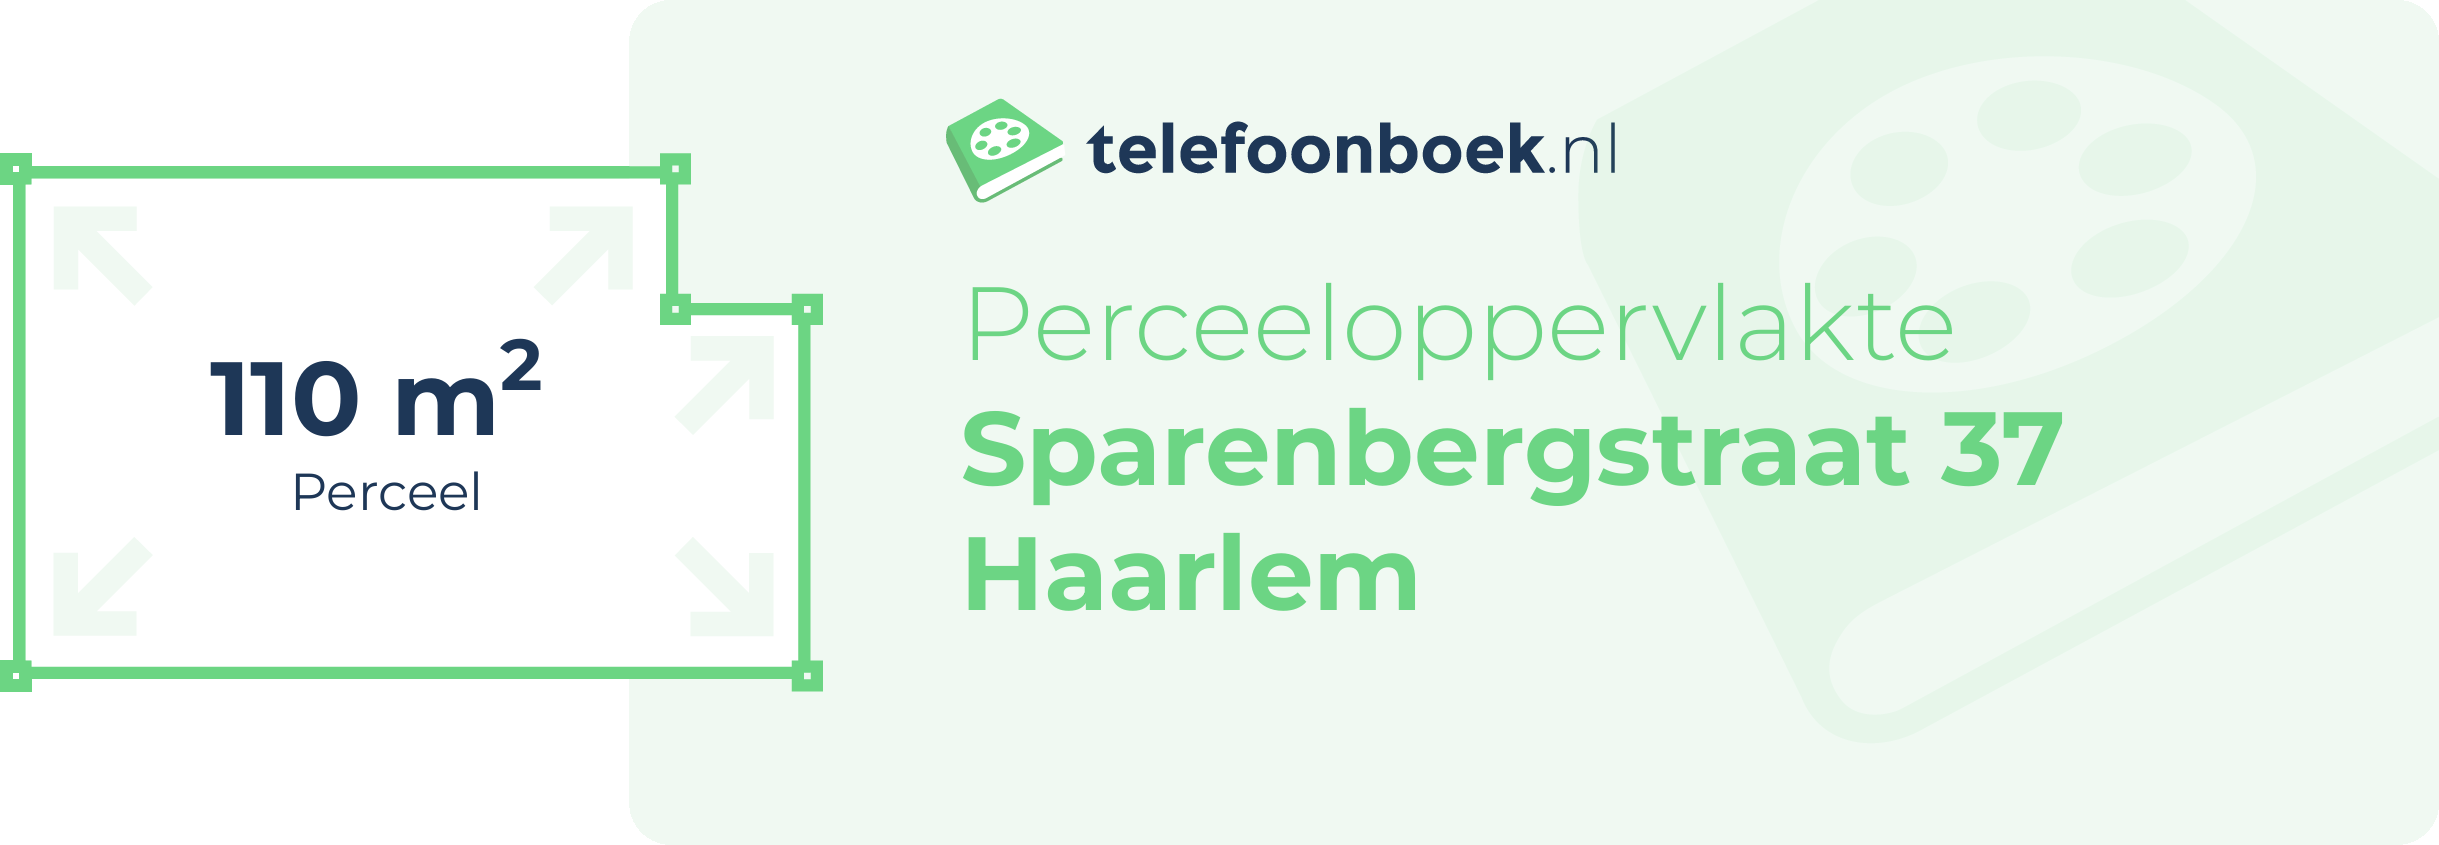 Perceeloppervlakte Sparenbergstraat 37 Haarlem